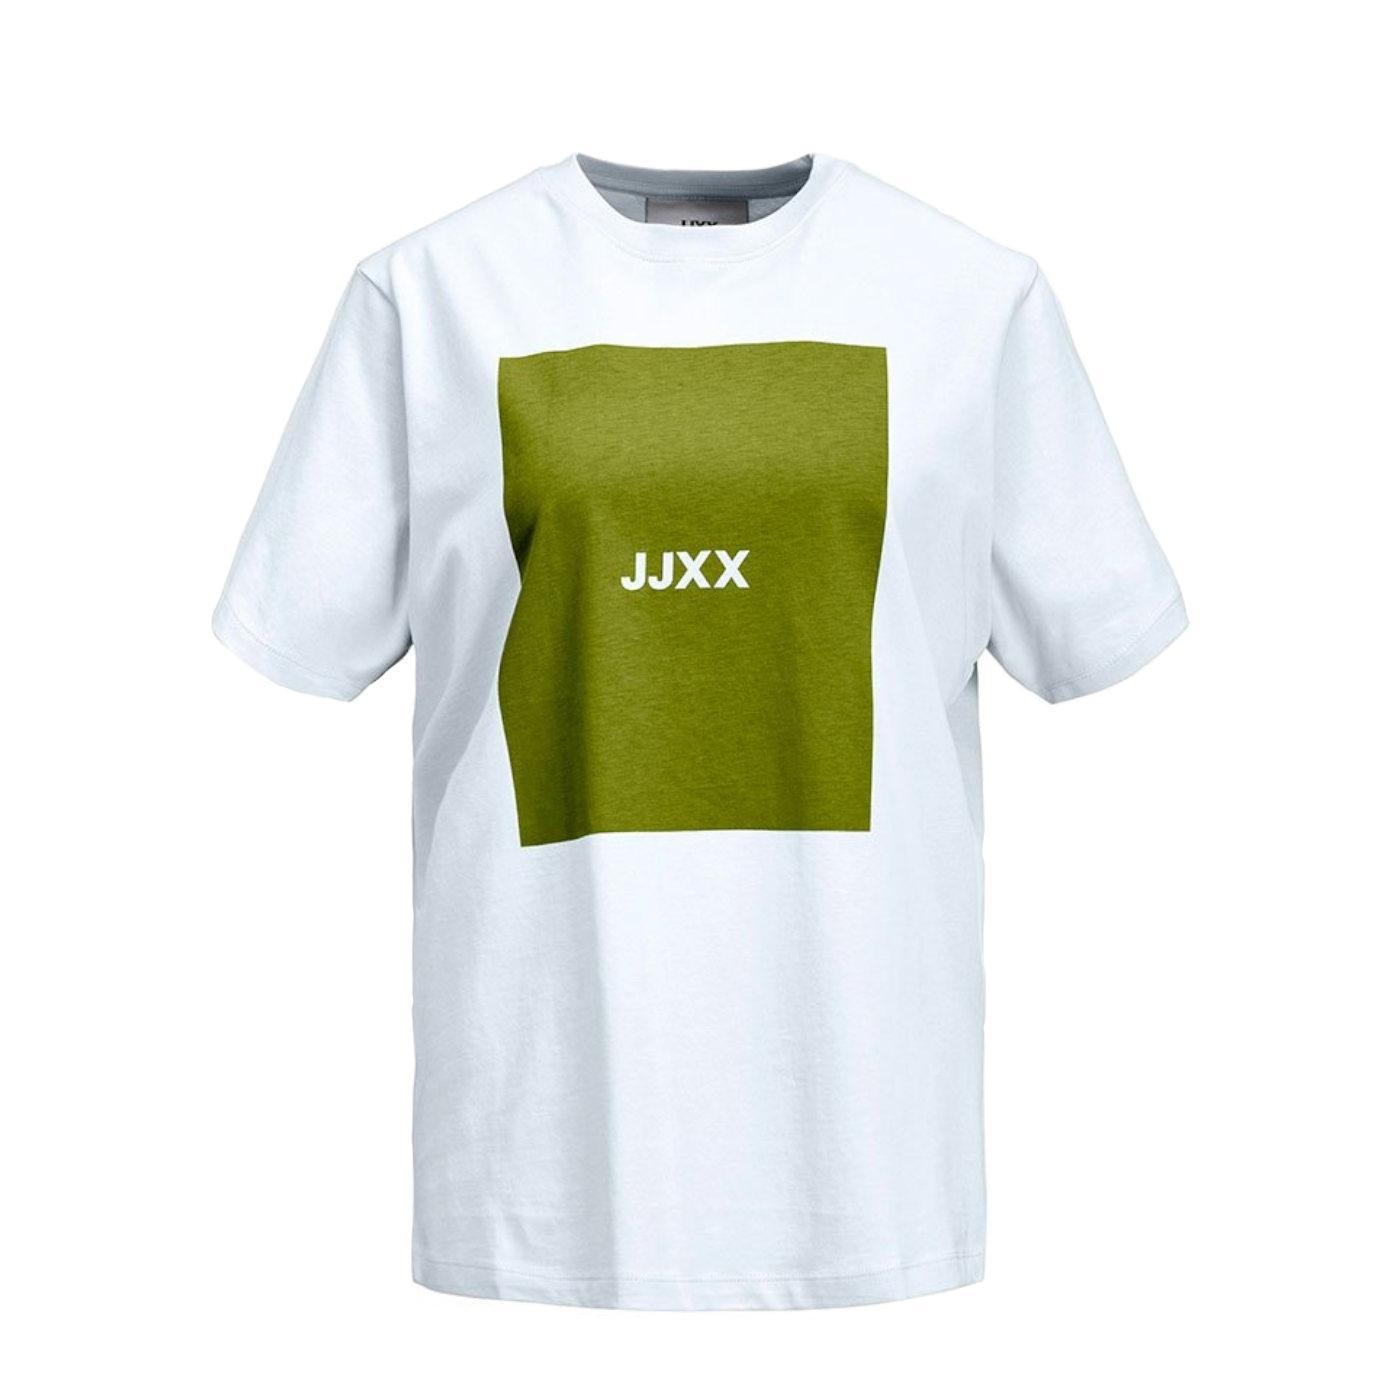 JJXX - 